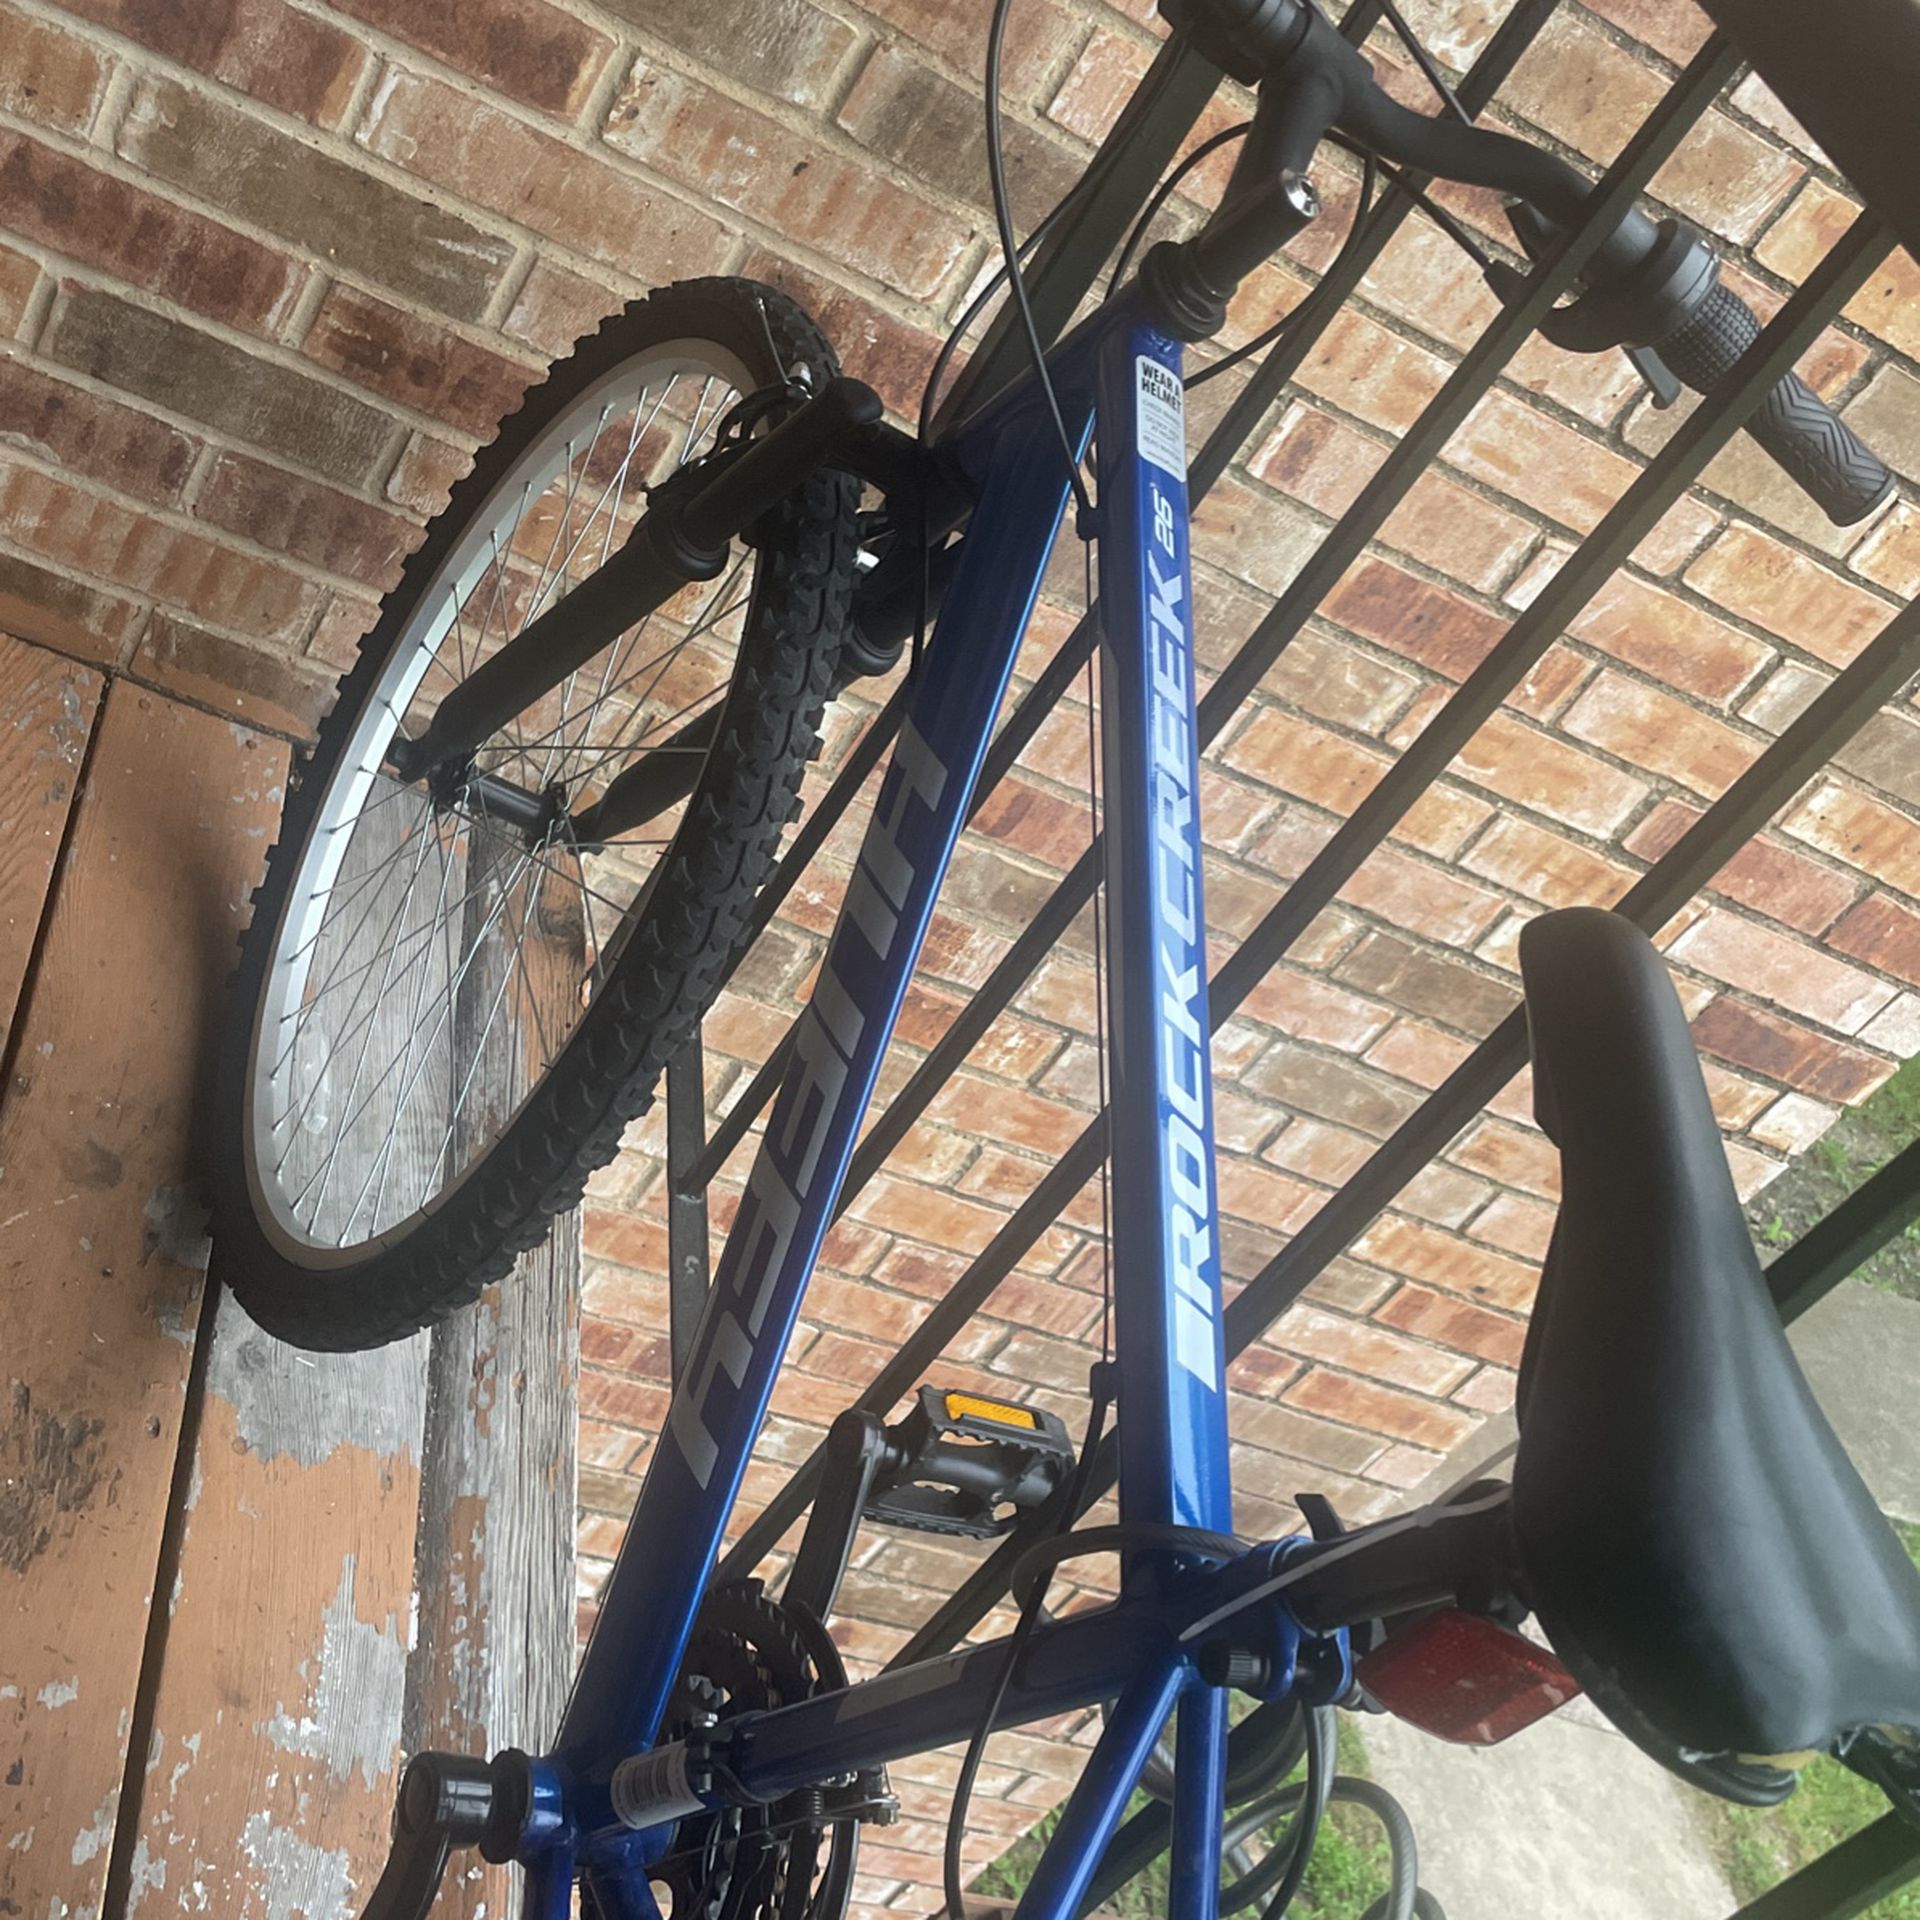 Huffy bike with Combination lock